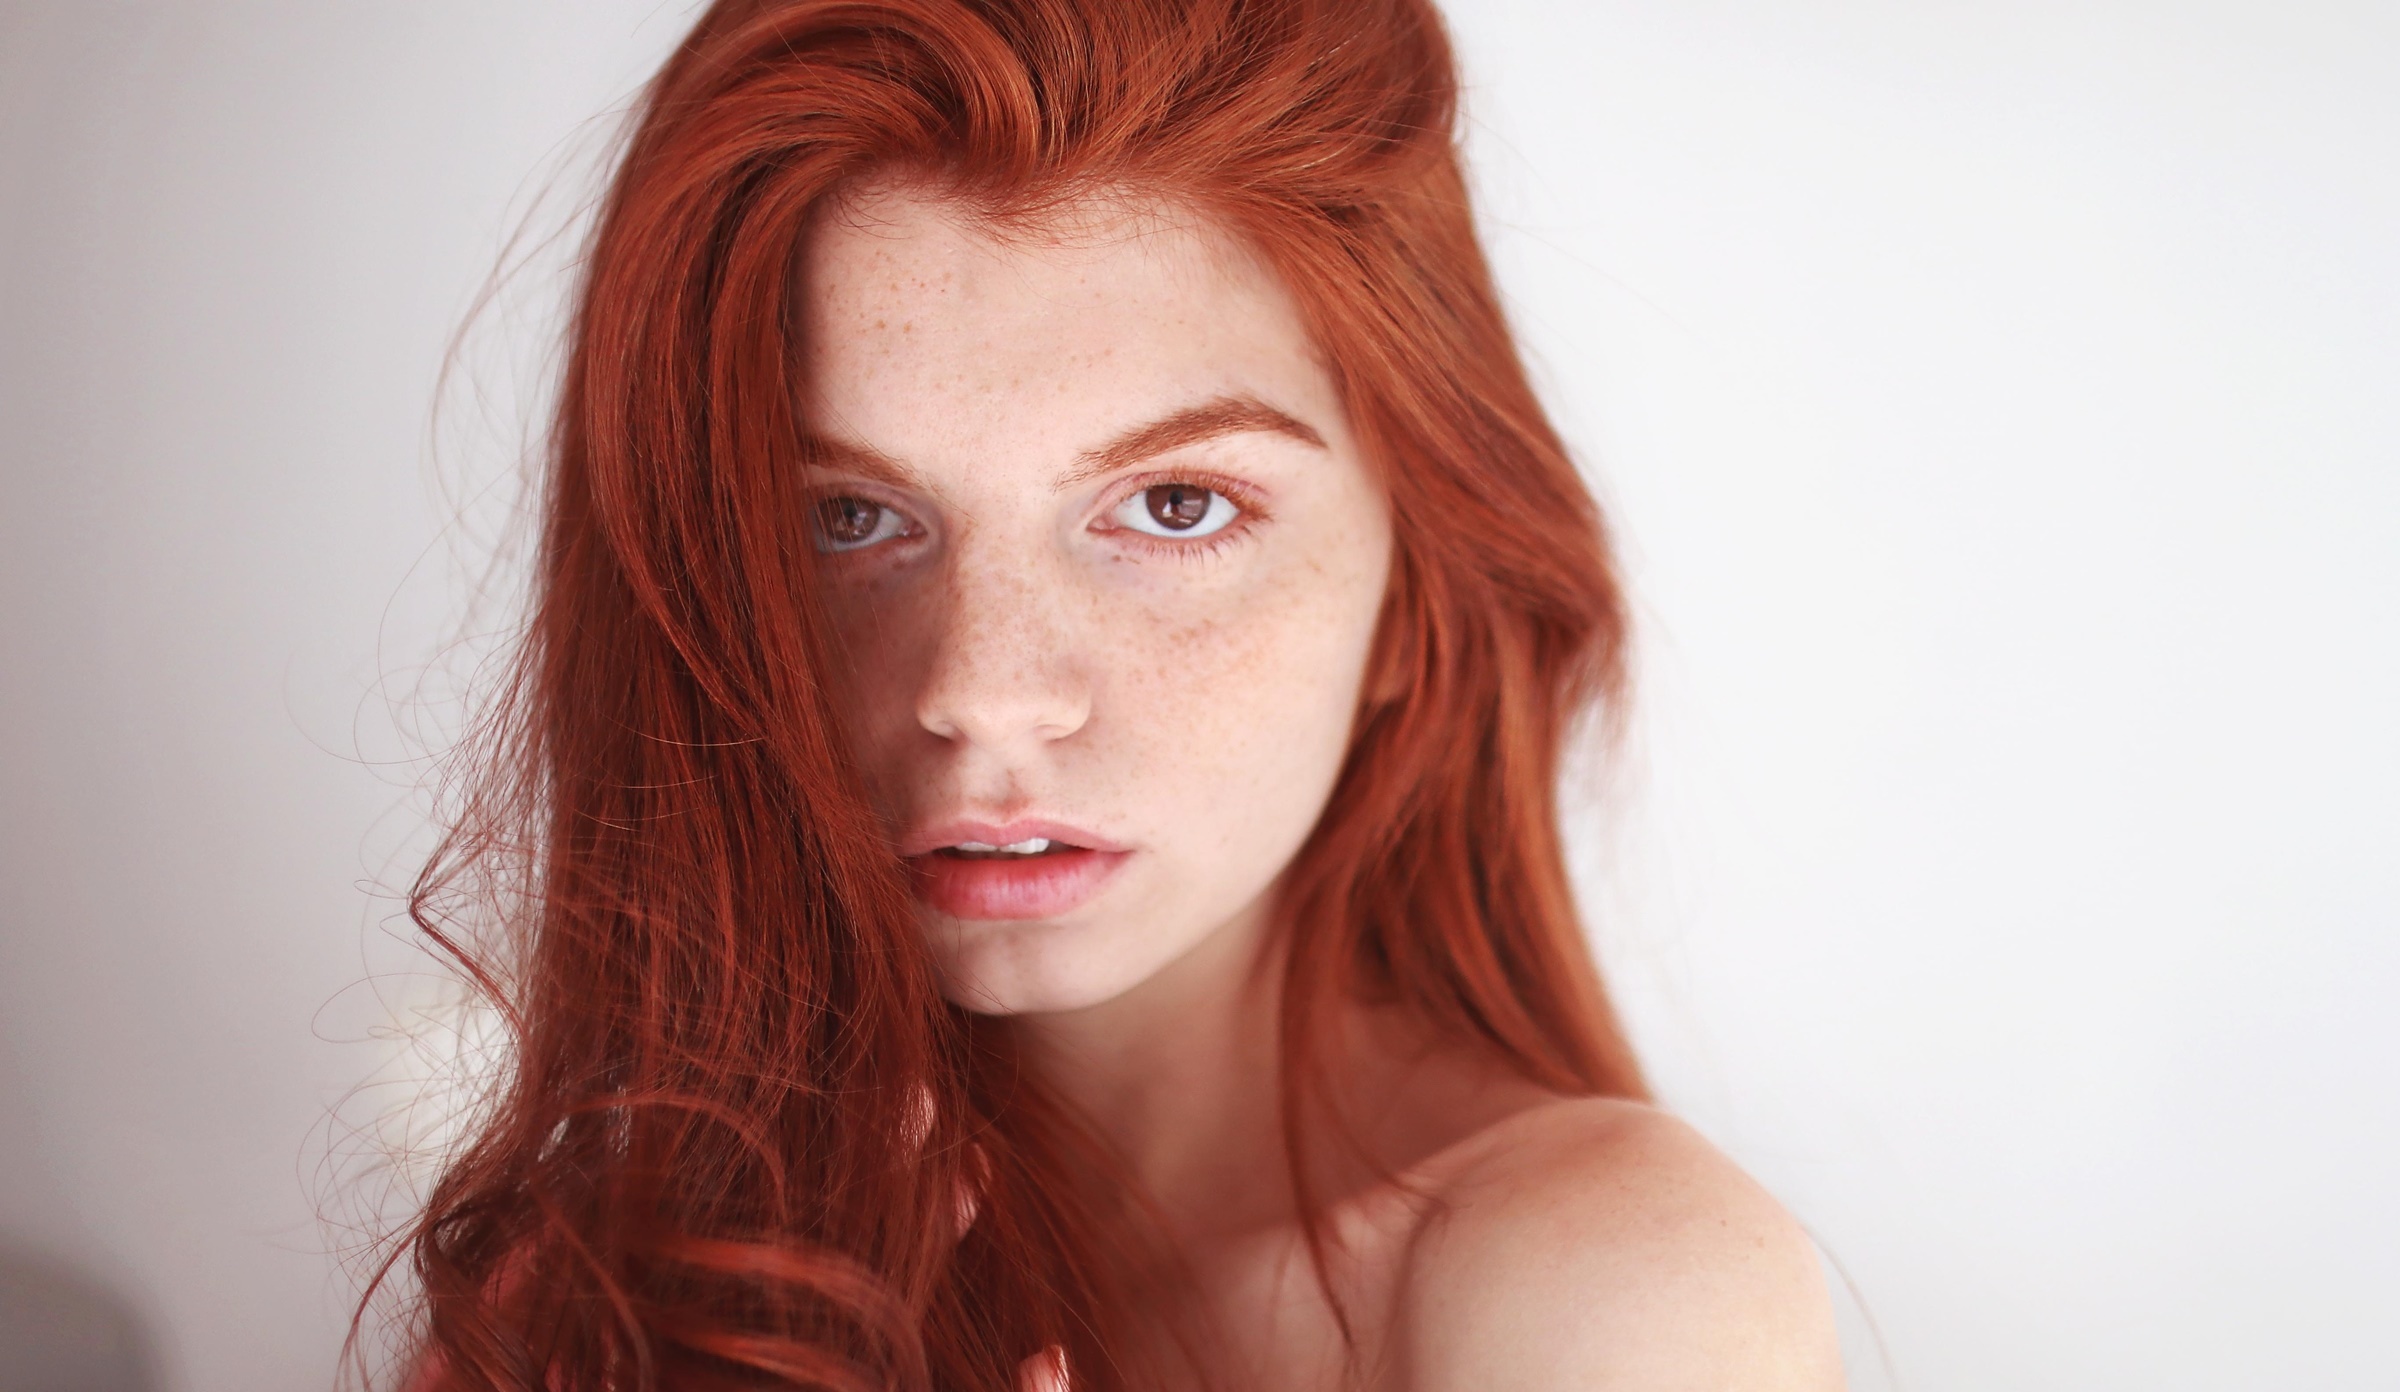 People 2400x1392 women model Suicide Girls redhead freckles looking at viewer brown eyes